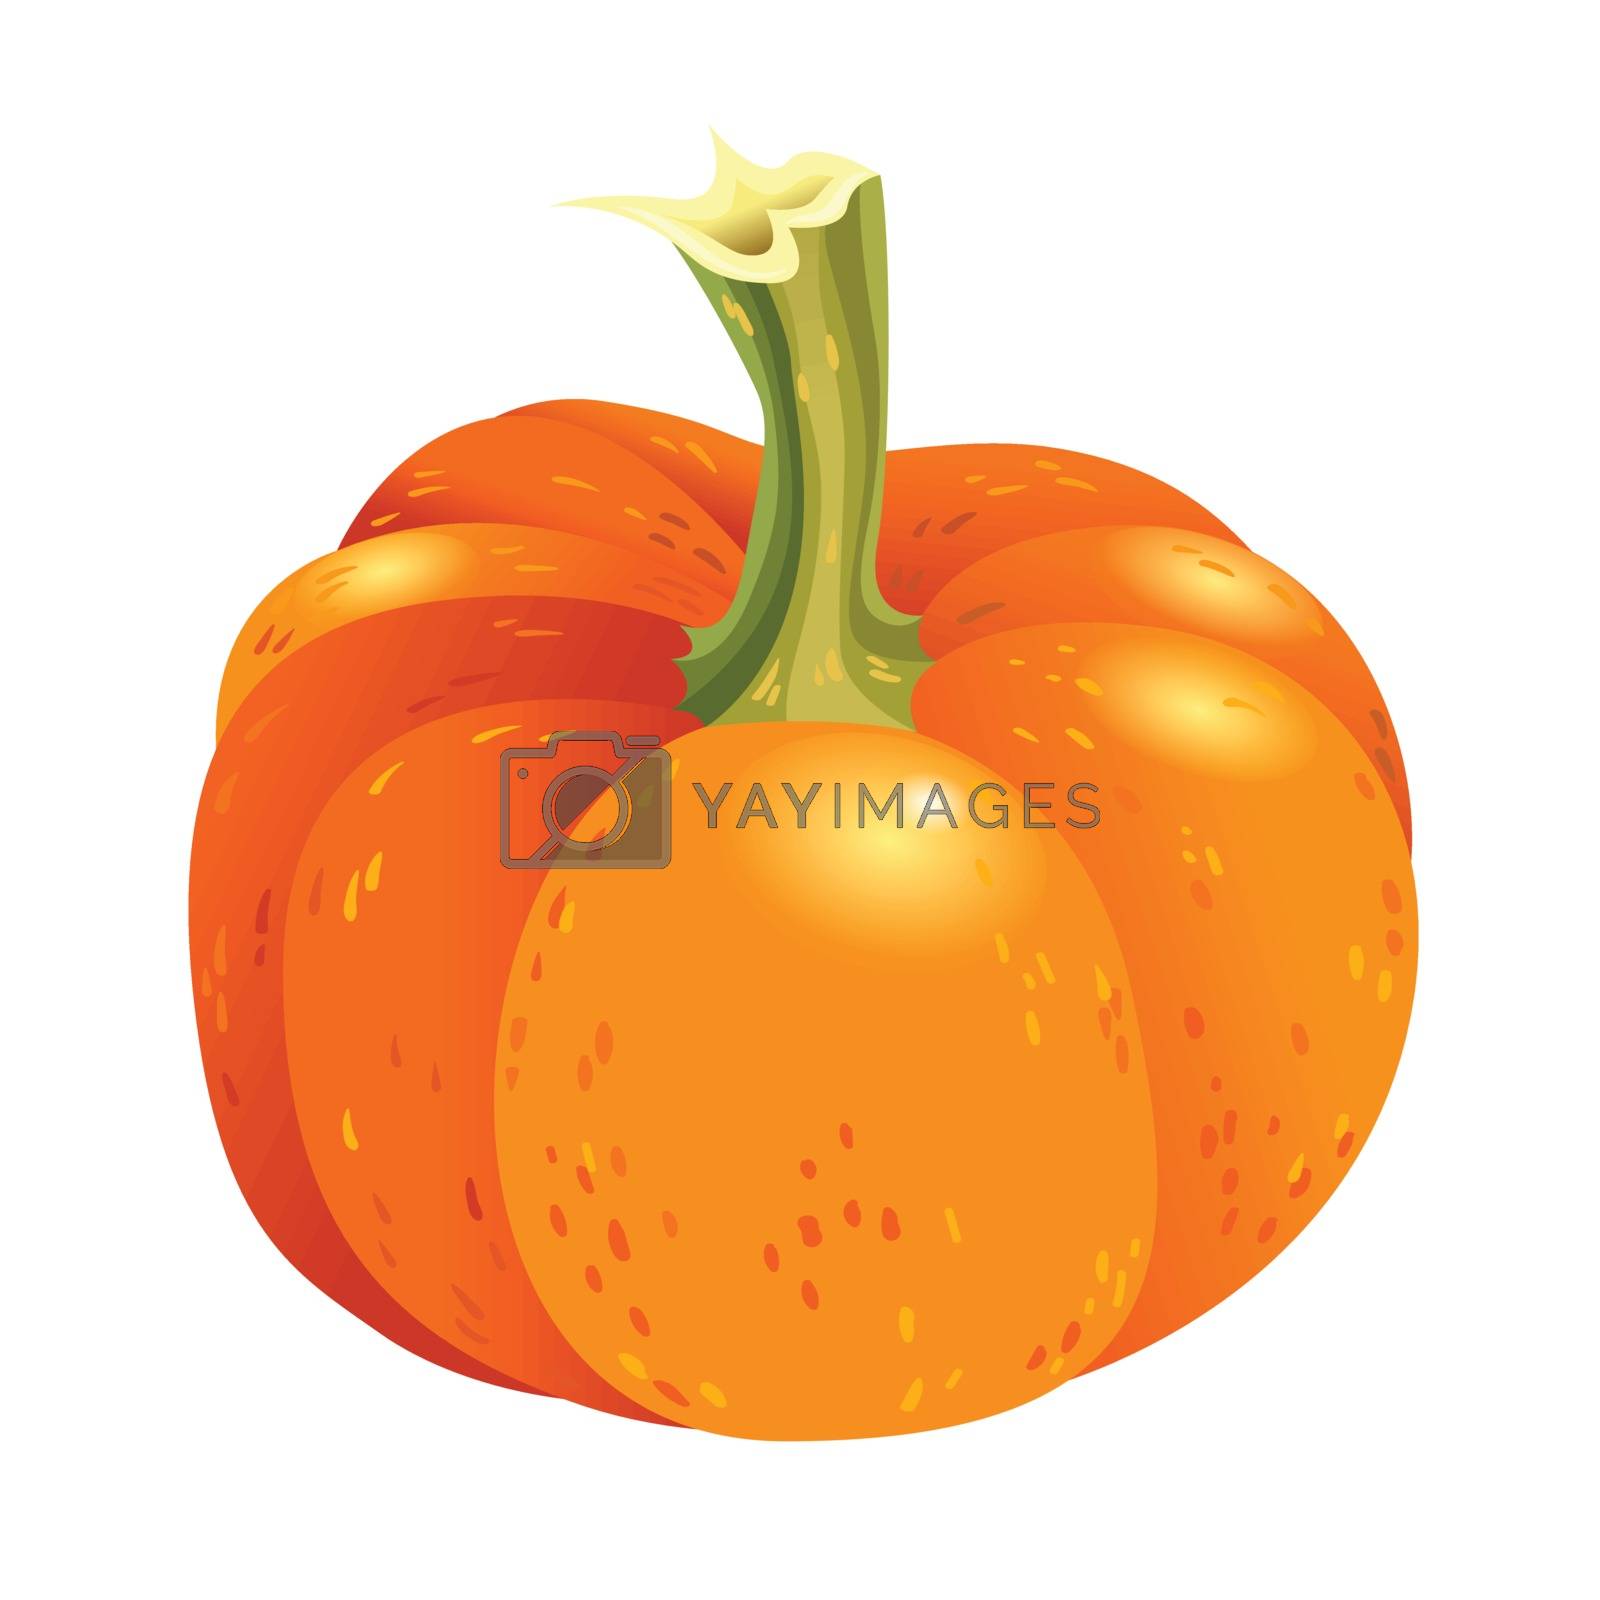 Royalty free image of Orange pumpkin isolated on white background. Vector autumn harvest illustration. by nutela_pancake